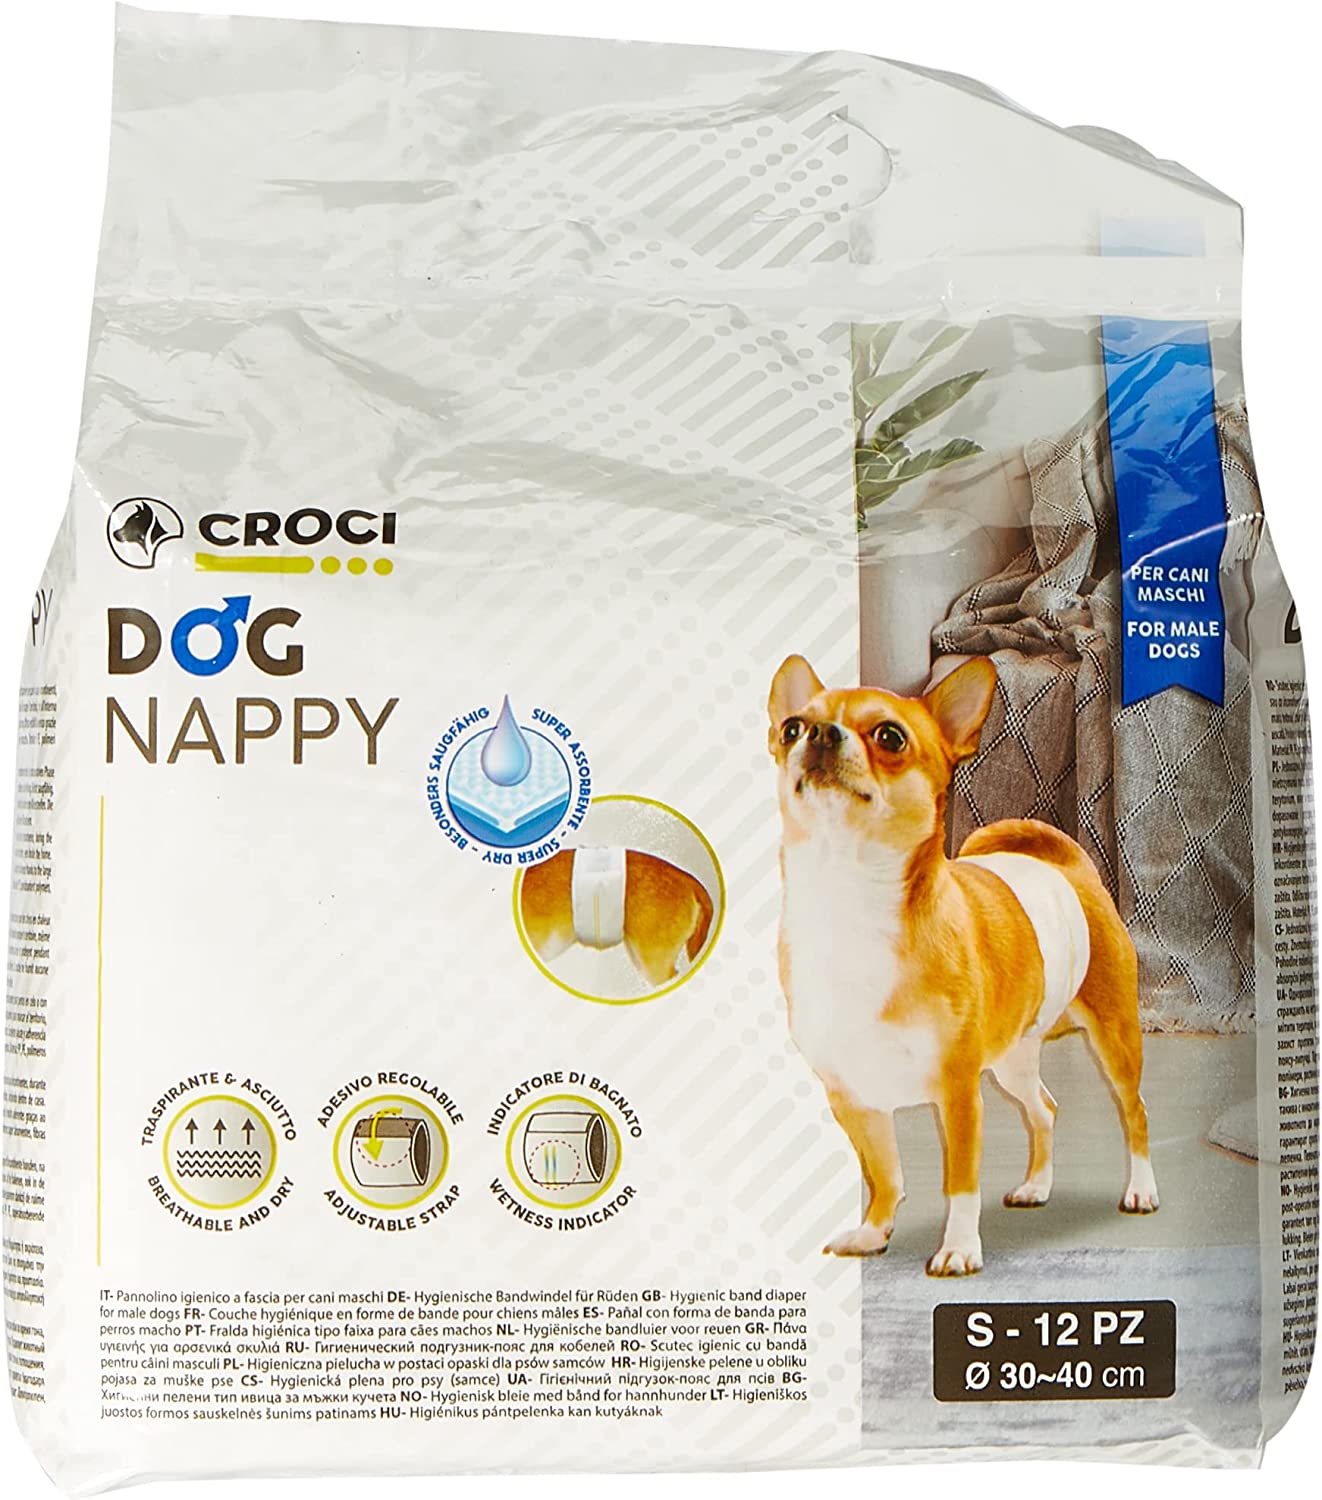 CROCI DOG NAPPY | NAYECO | pañal para perro macho (12 unidades).